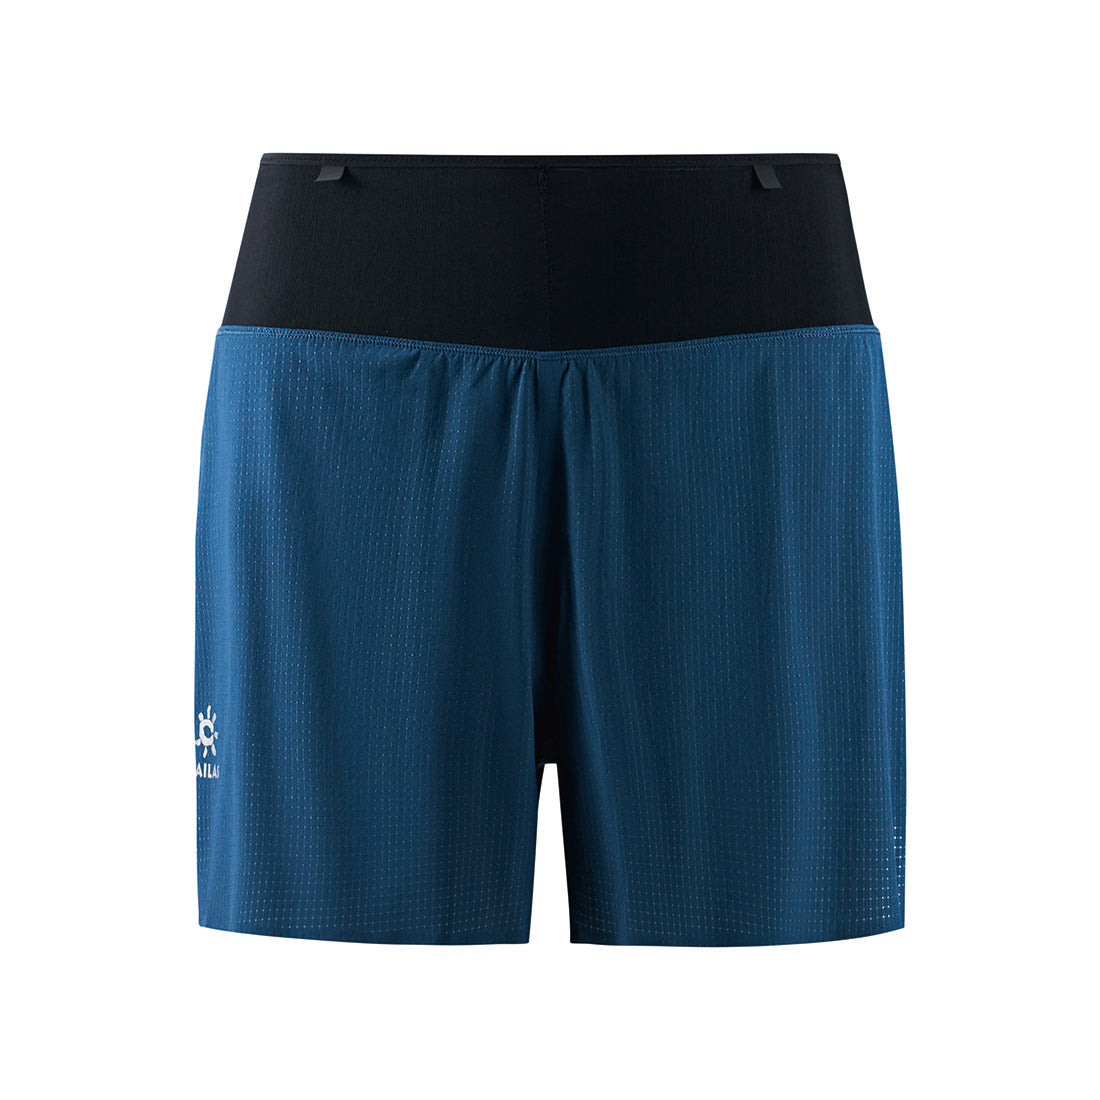 Aurola workout shorts - Gem